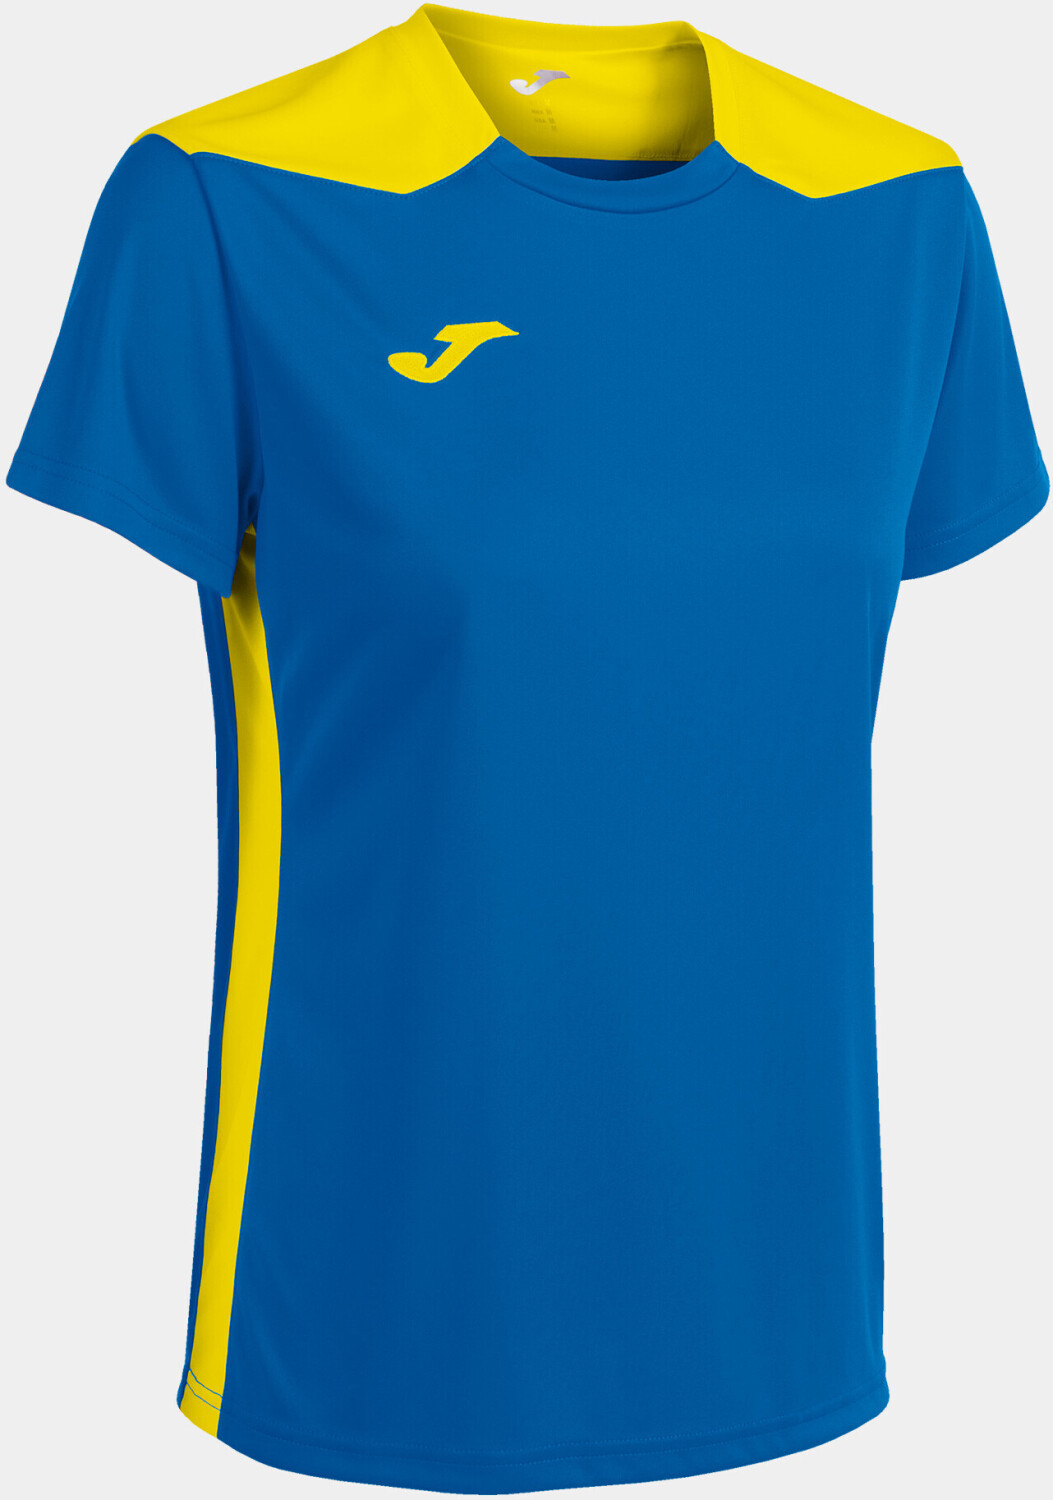 Photos - Football Kit Joma Championship VI Shirt Youth  royal blue/yellow (101822k)